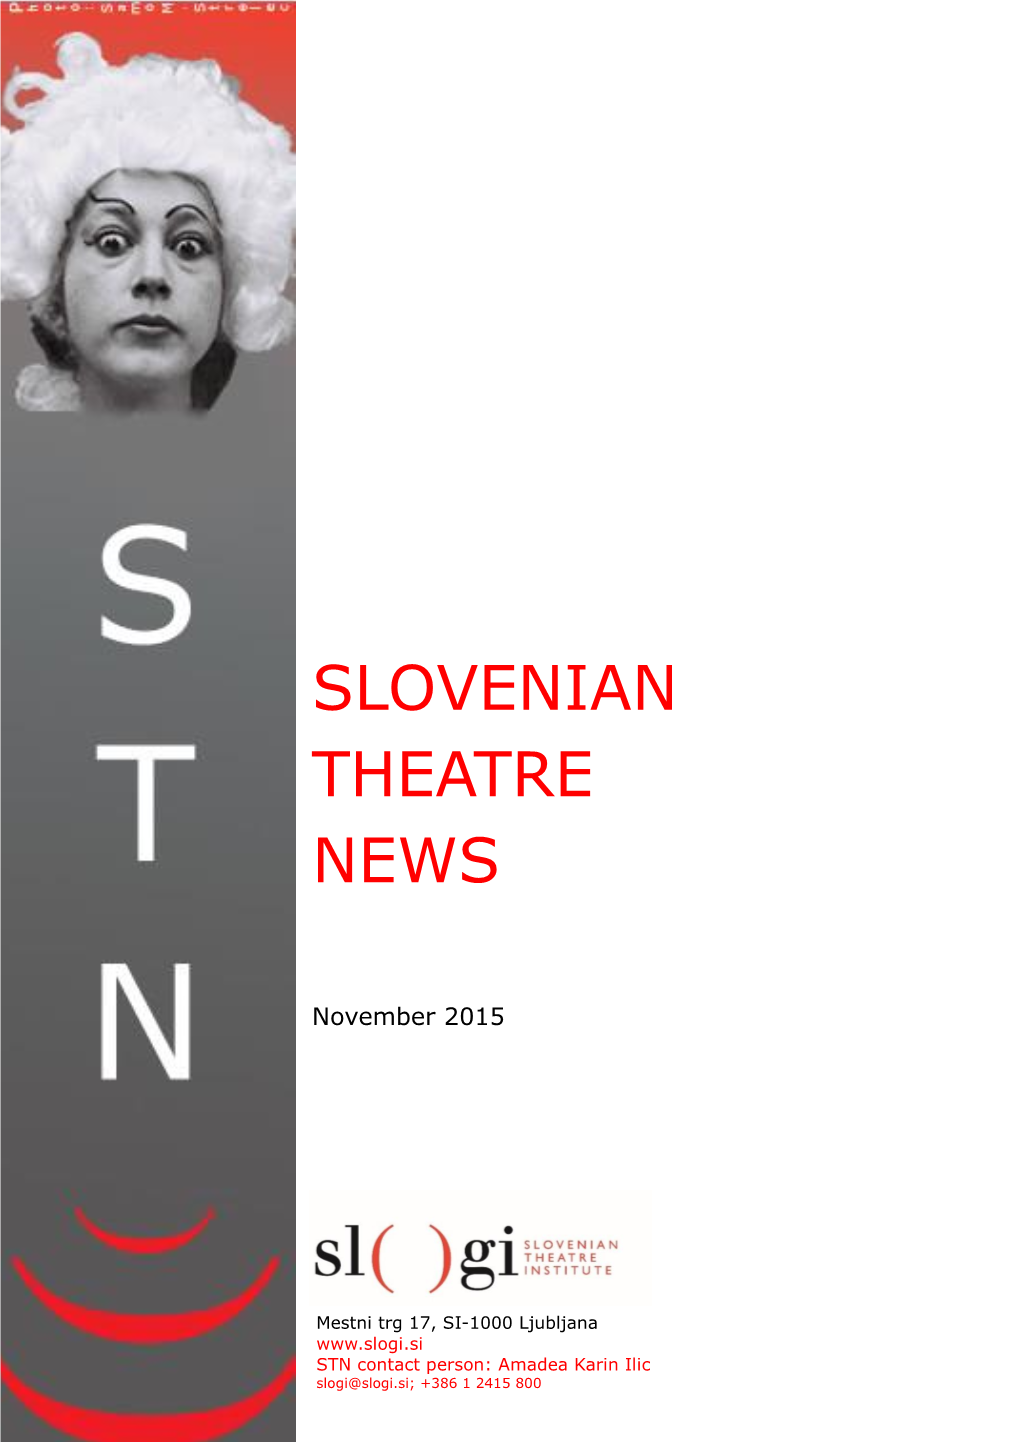 Slovenian Theatre News